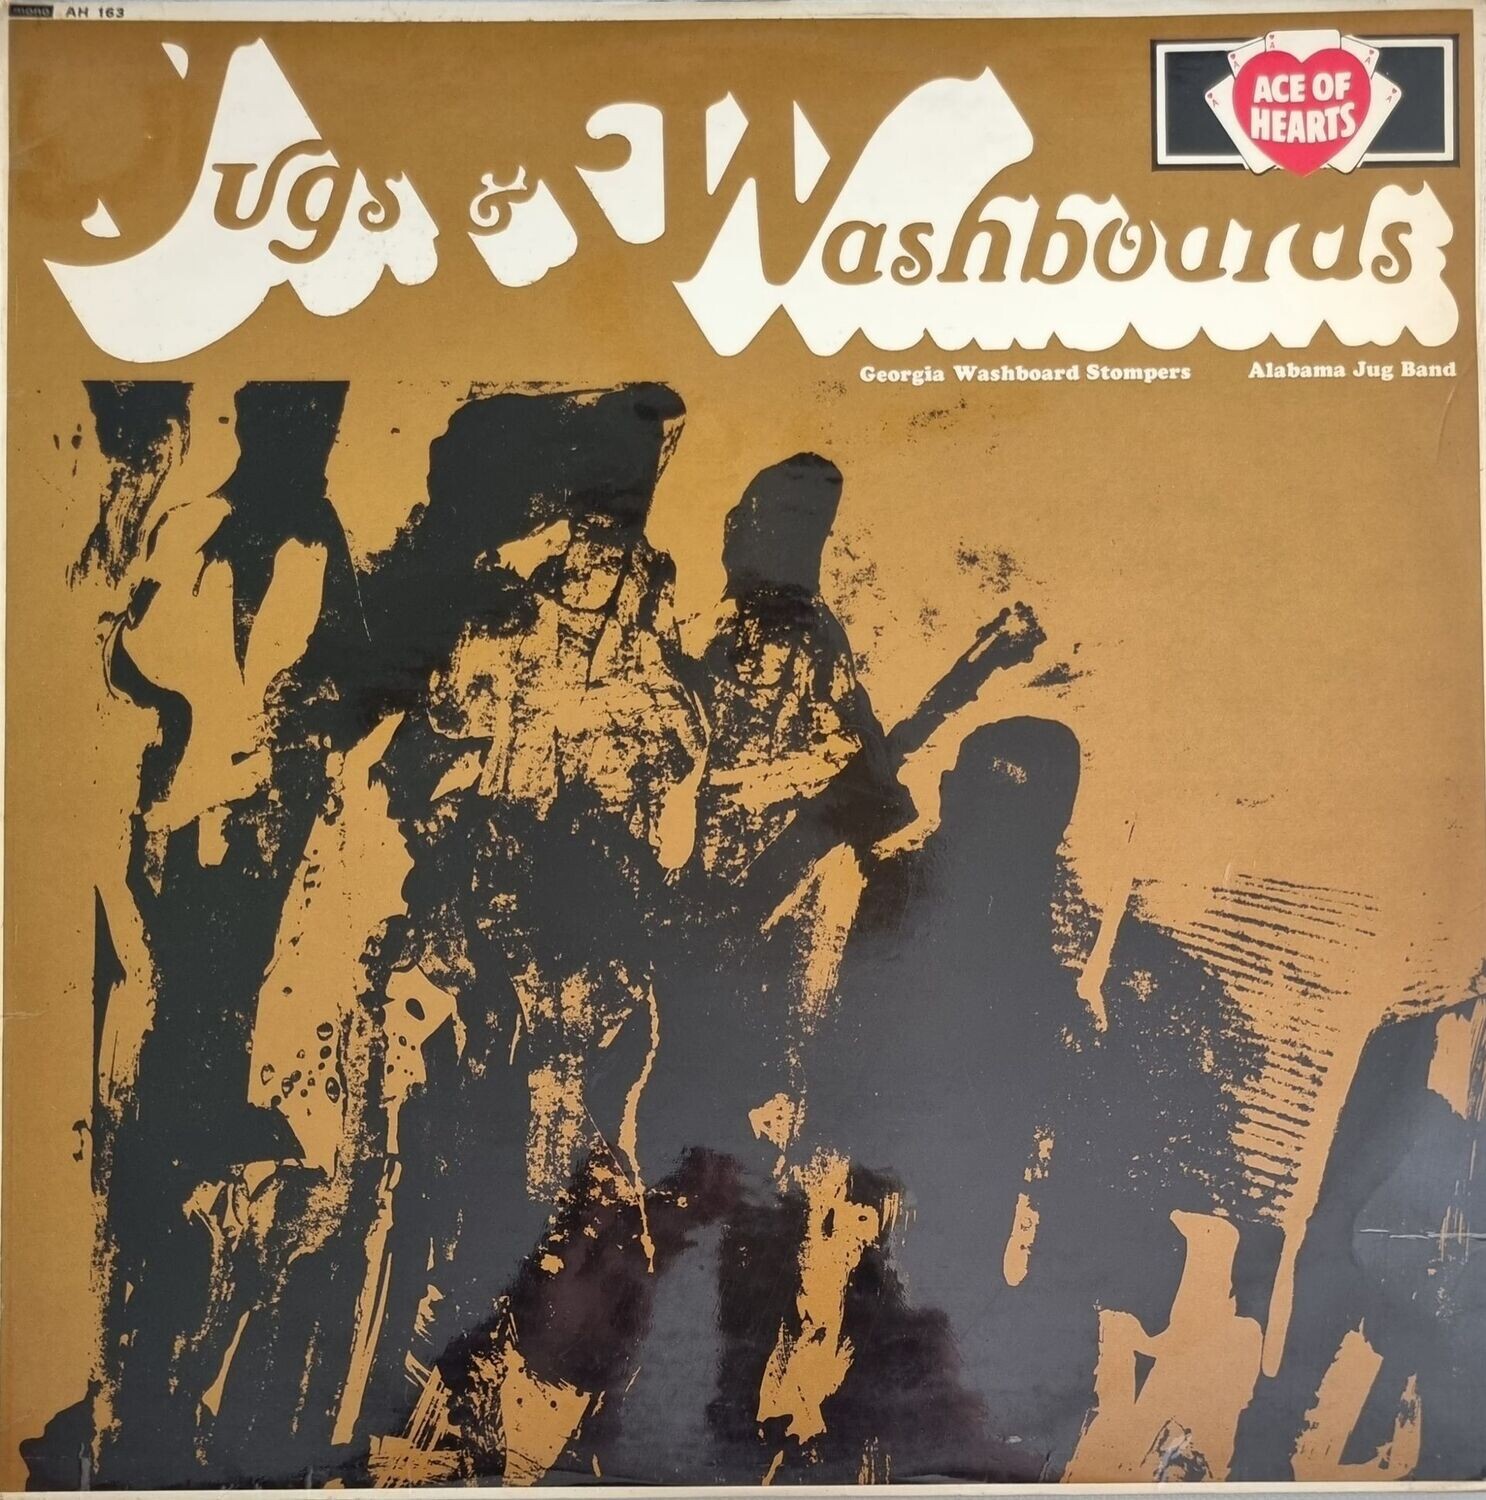 Georgia Washboard Stompers/ Alabama Jug Band – Jugs & Washboards (1967)